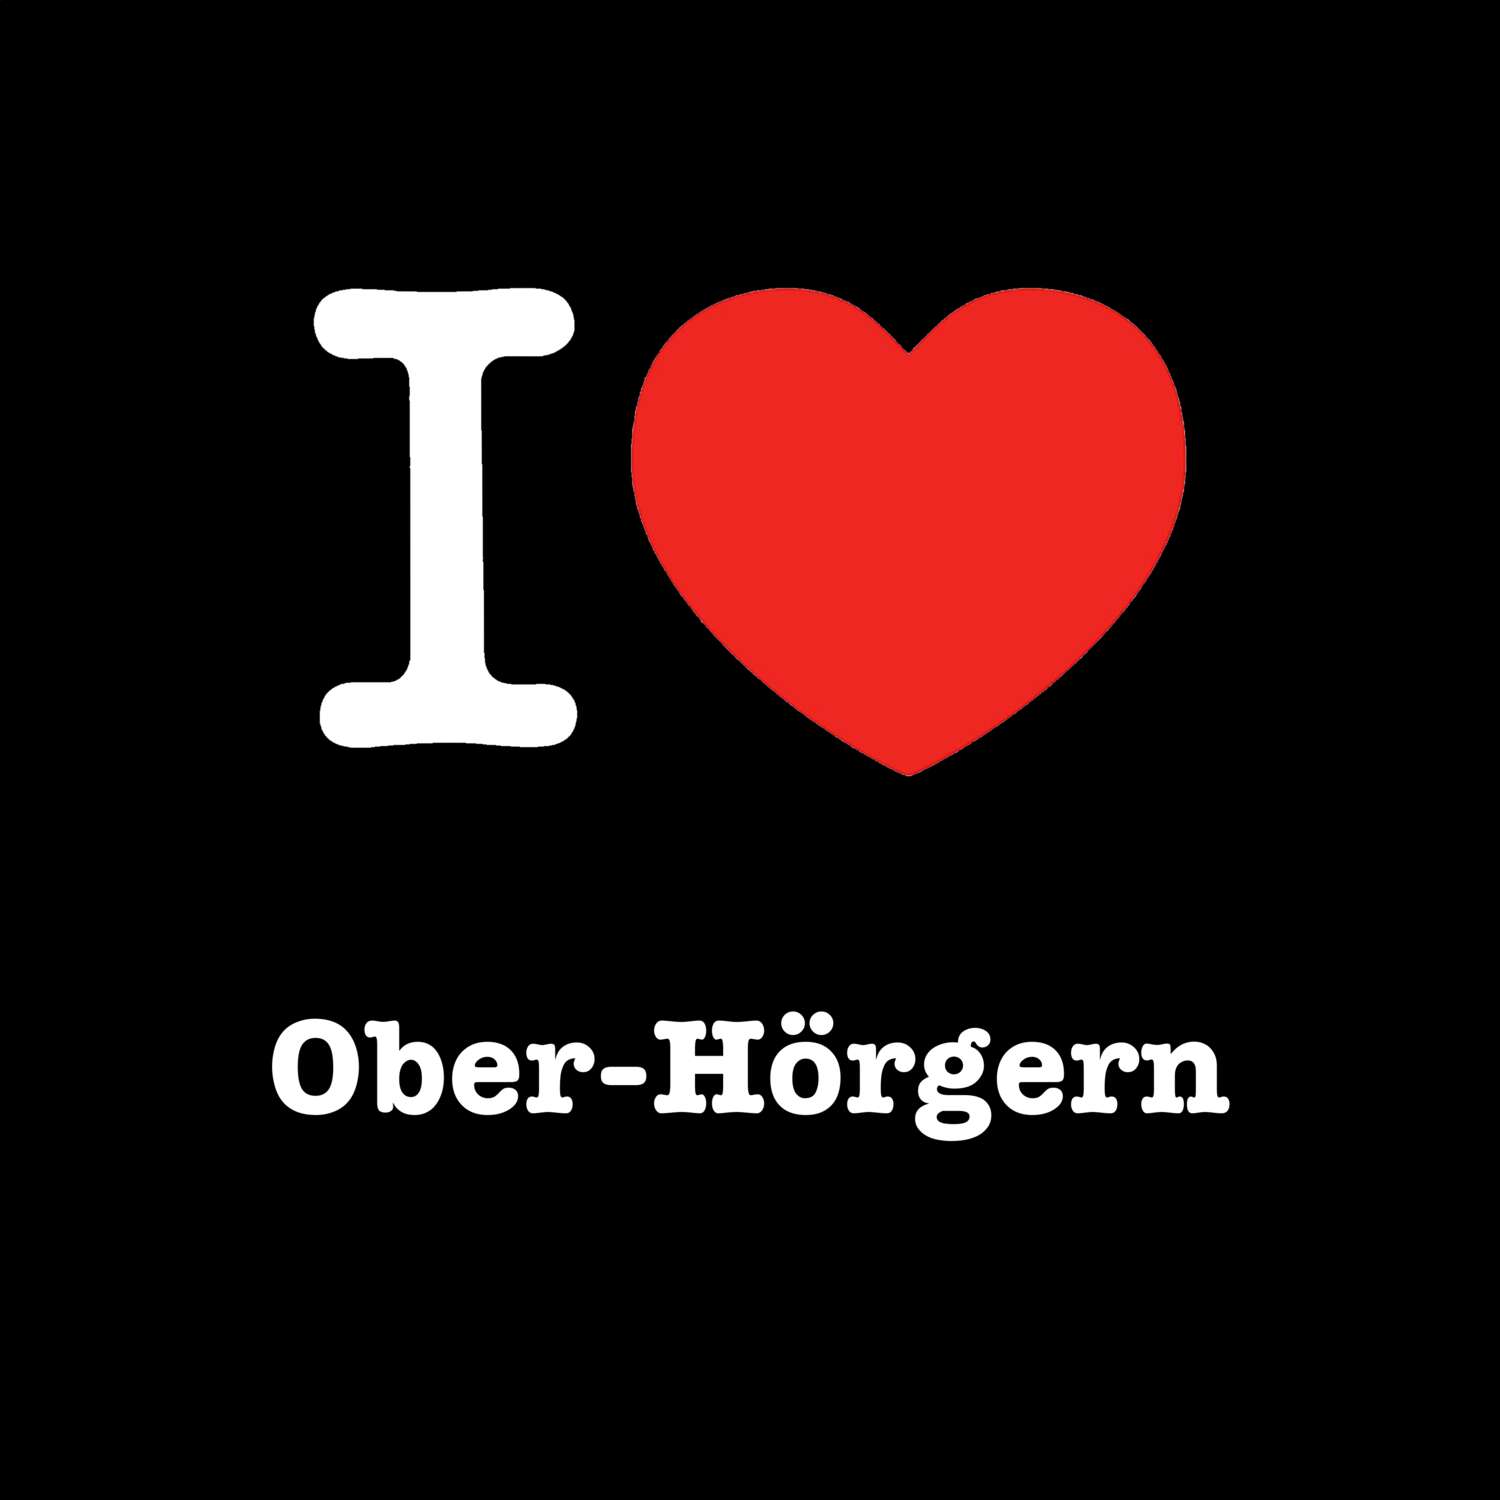 Ober-Hörgern T-Shirt »I love«